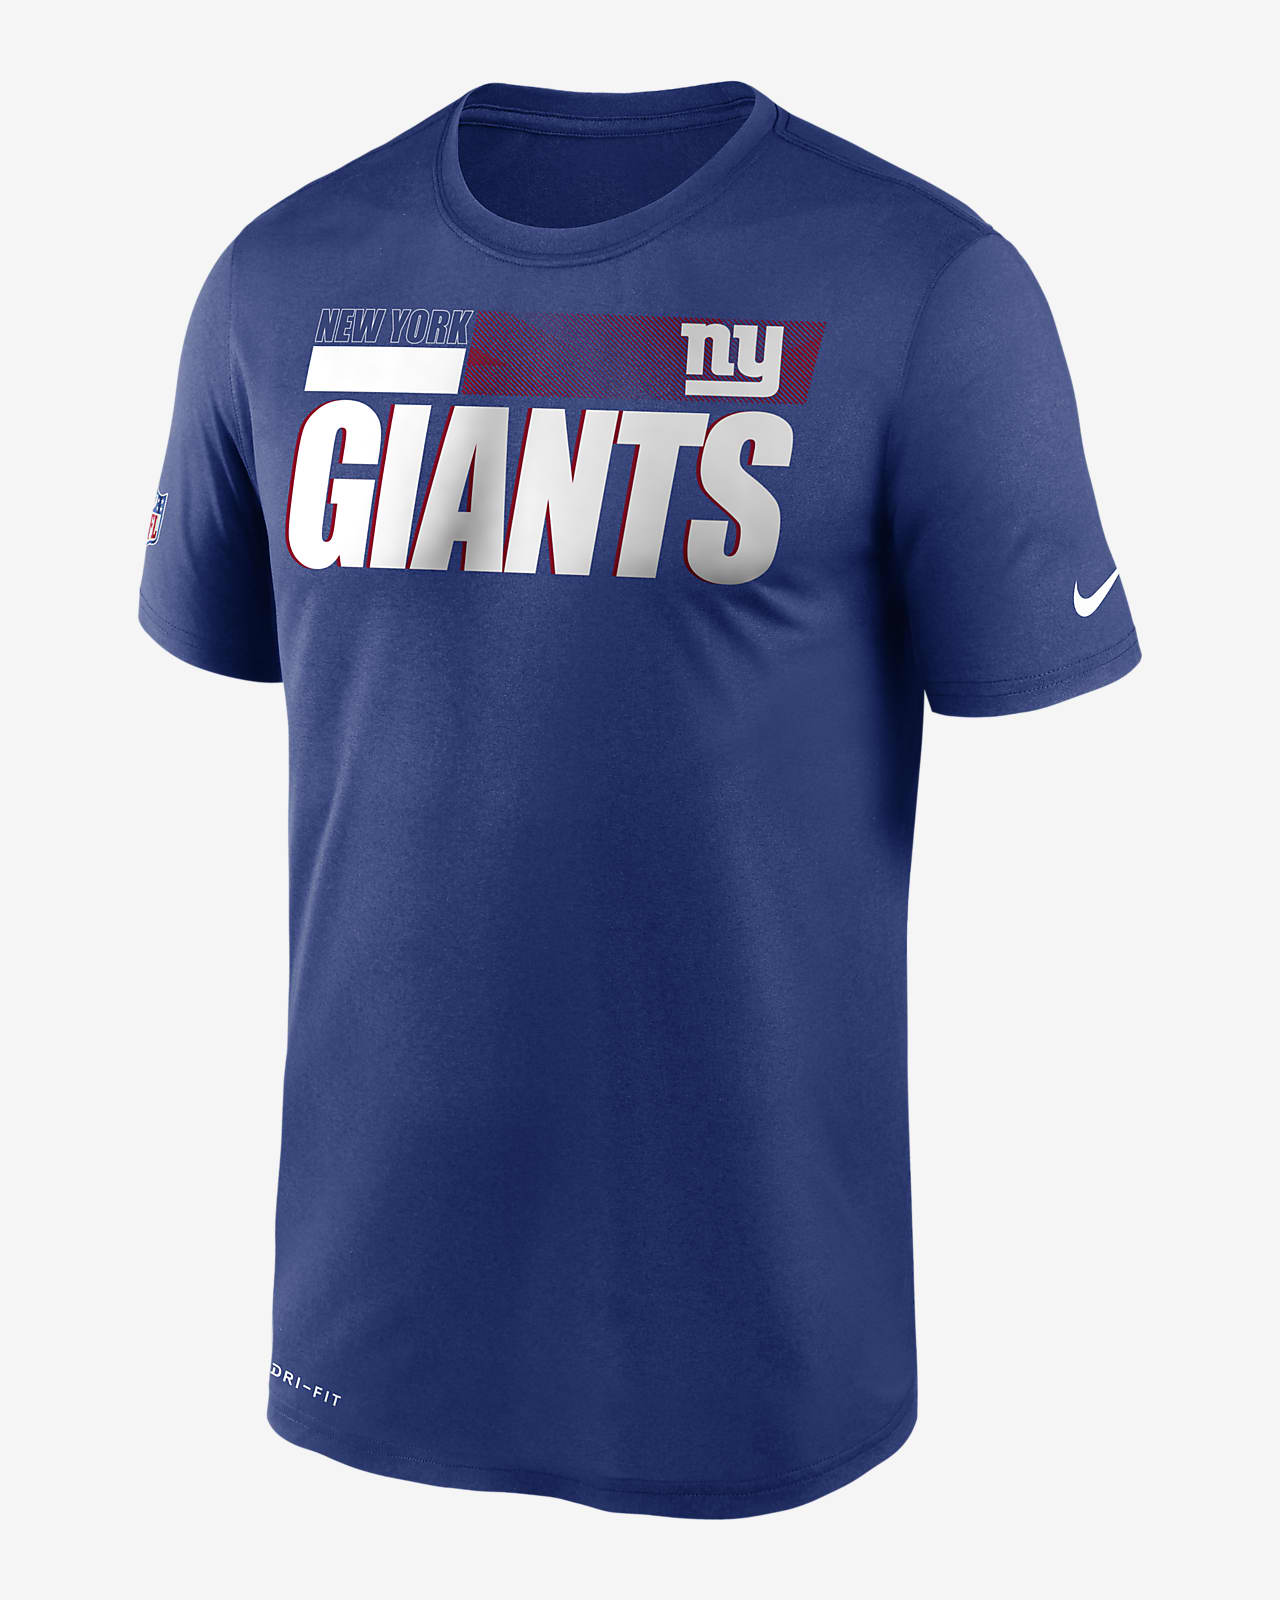 AJh,new york giants men's t shirts 